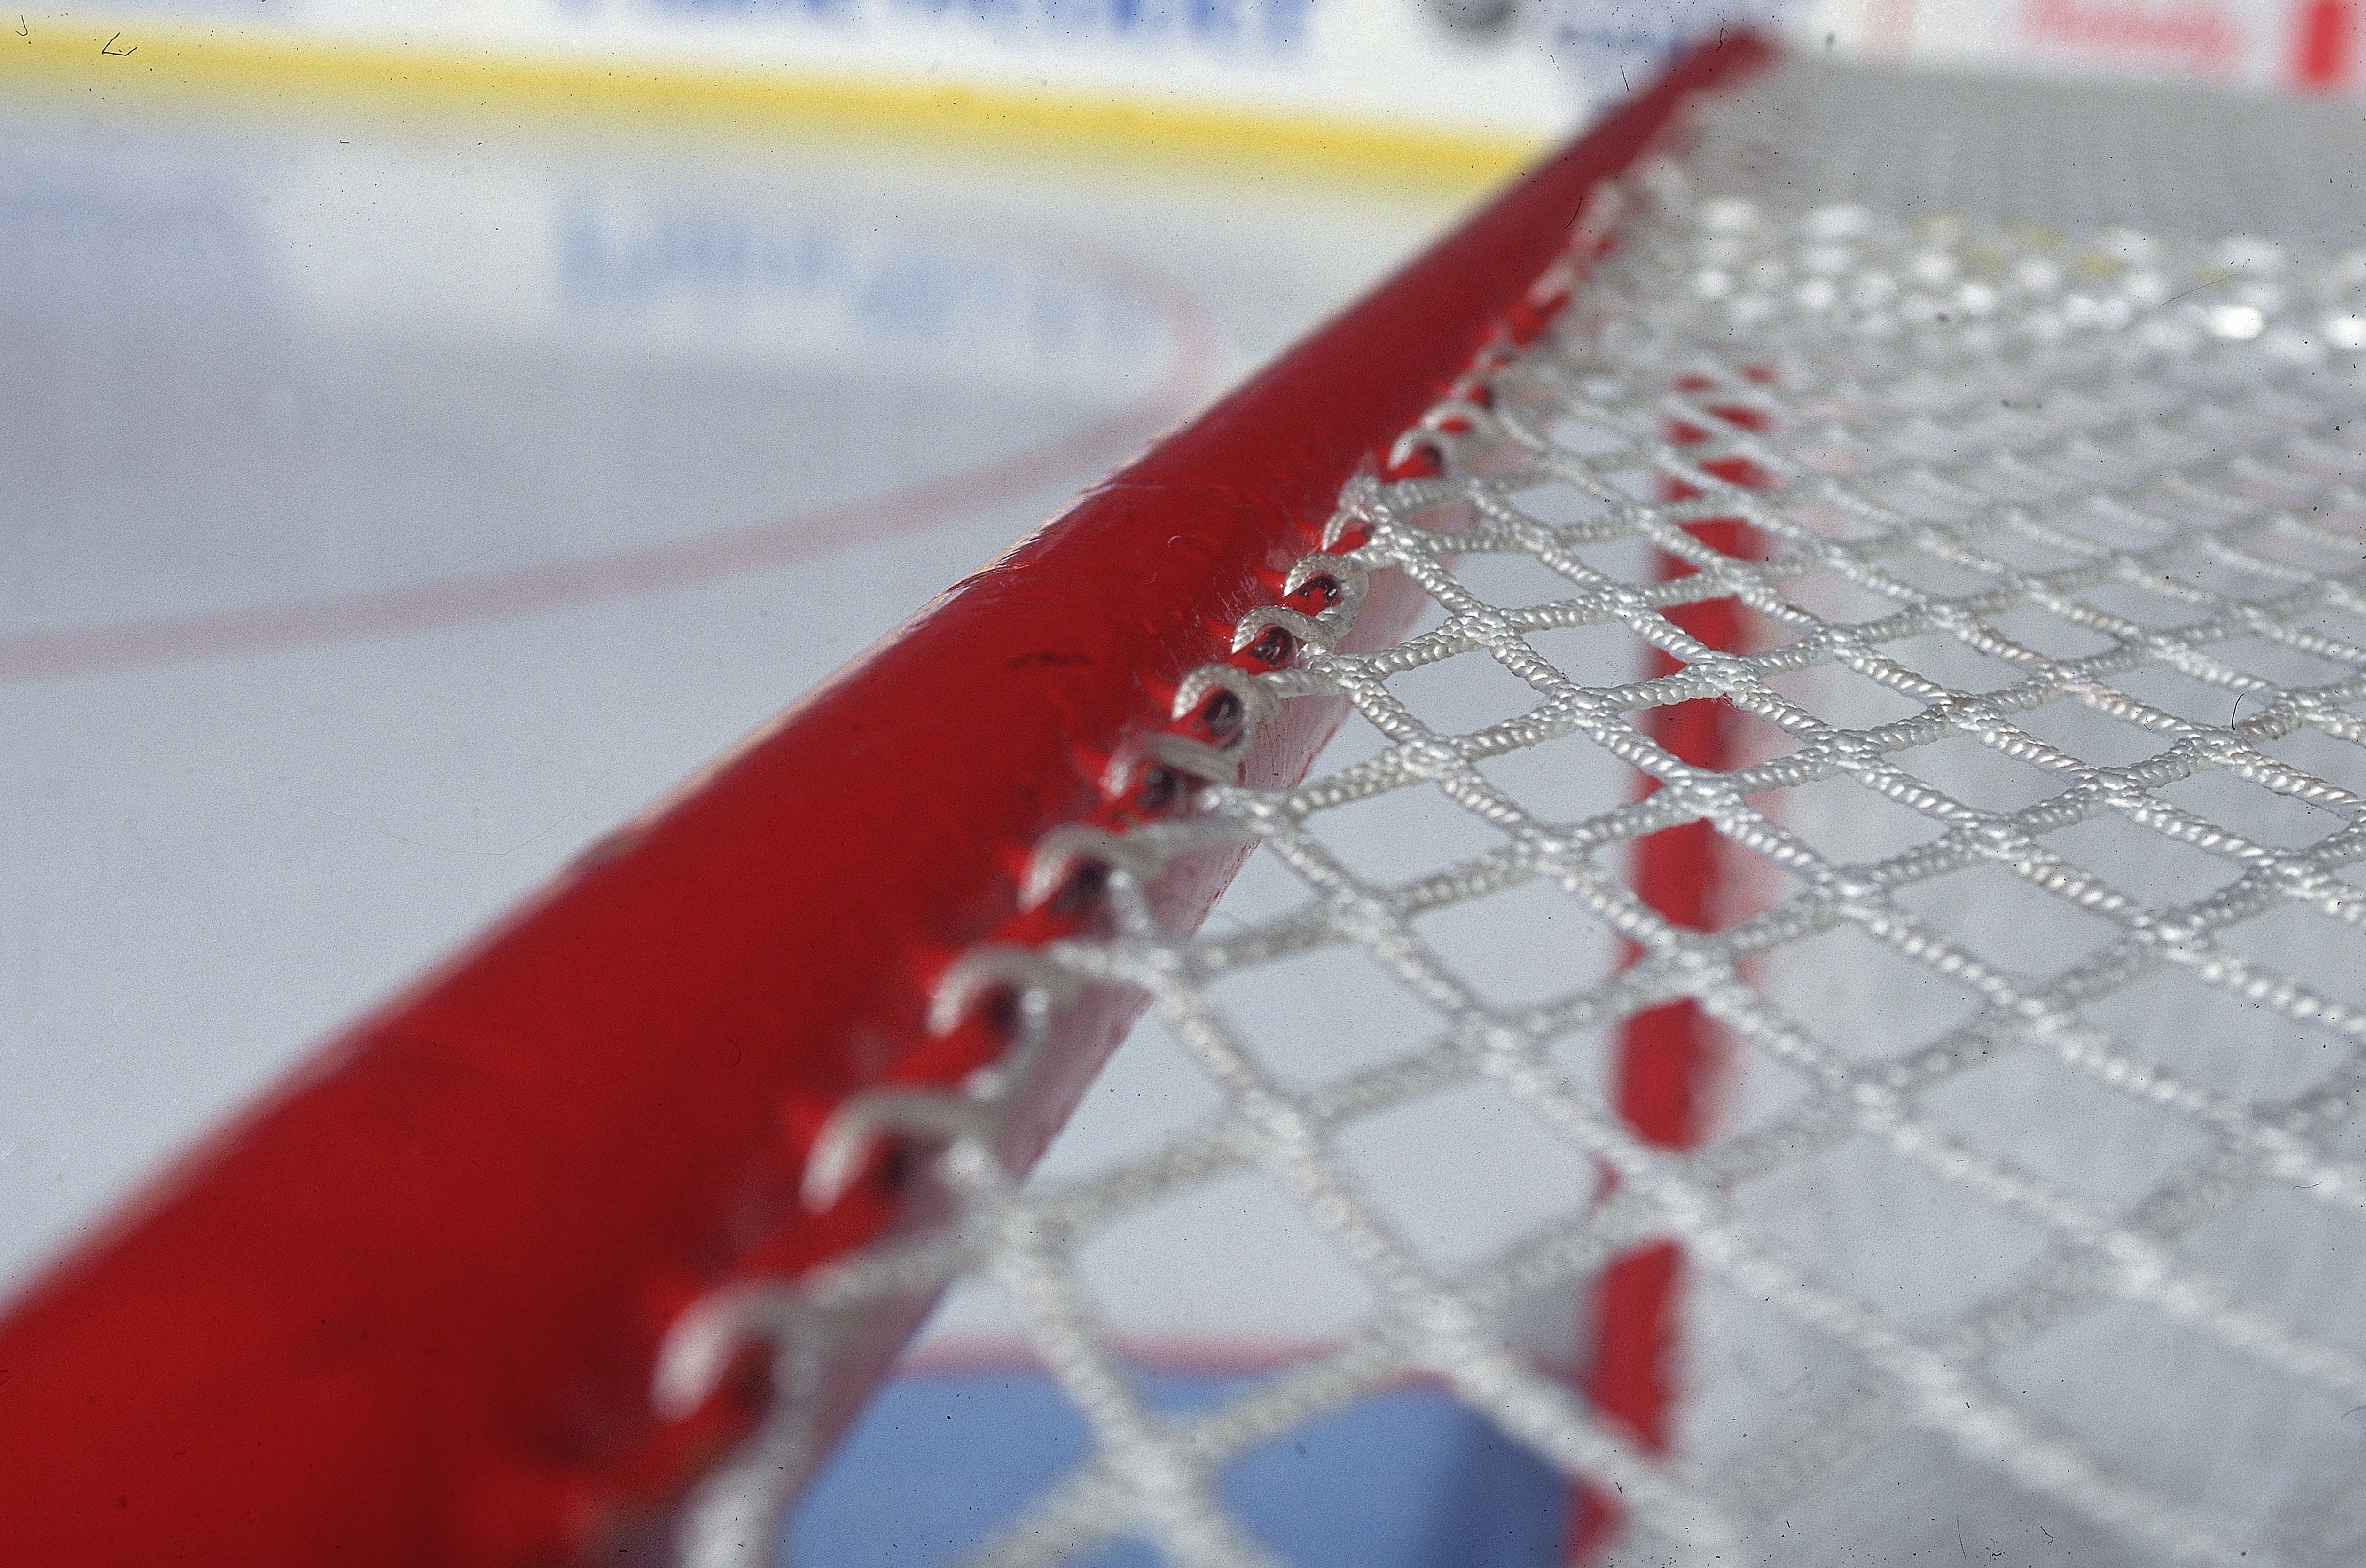 Hockey player Teddy Balkind's death ruled accident, medical